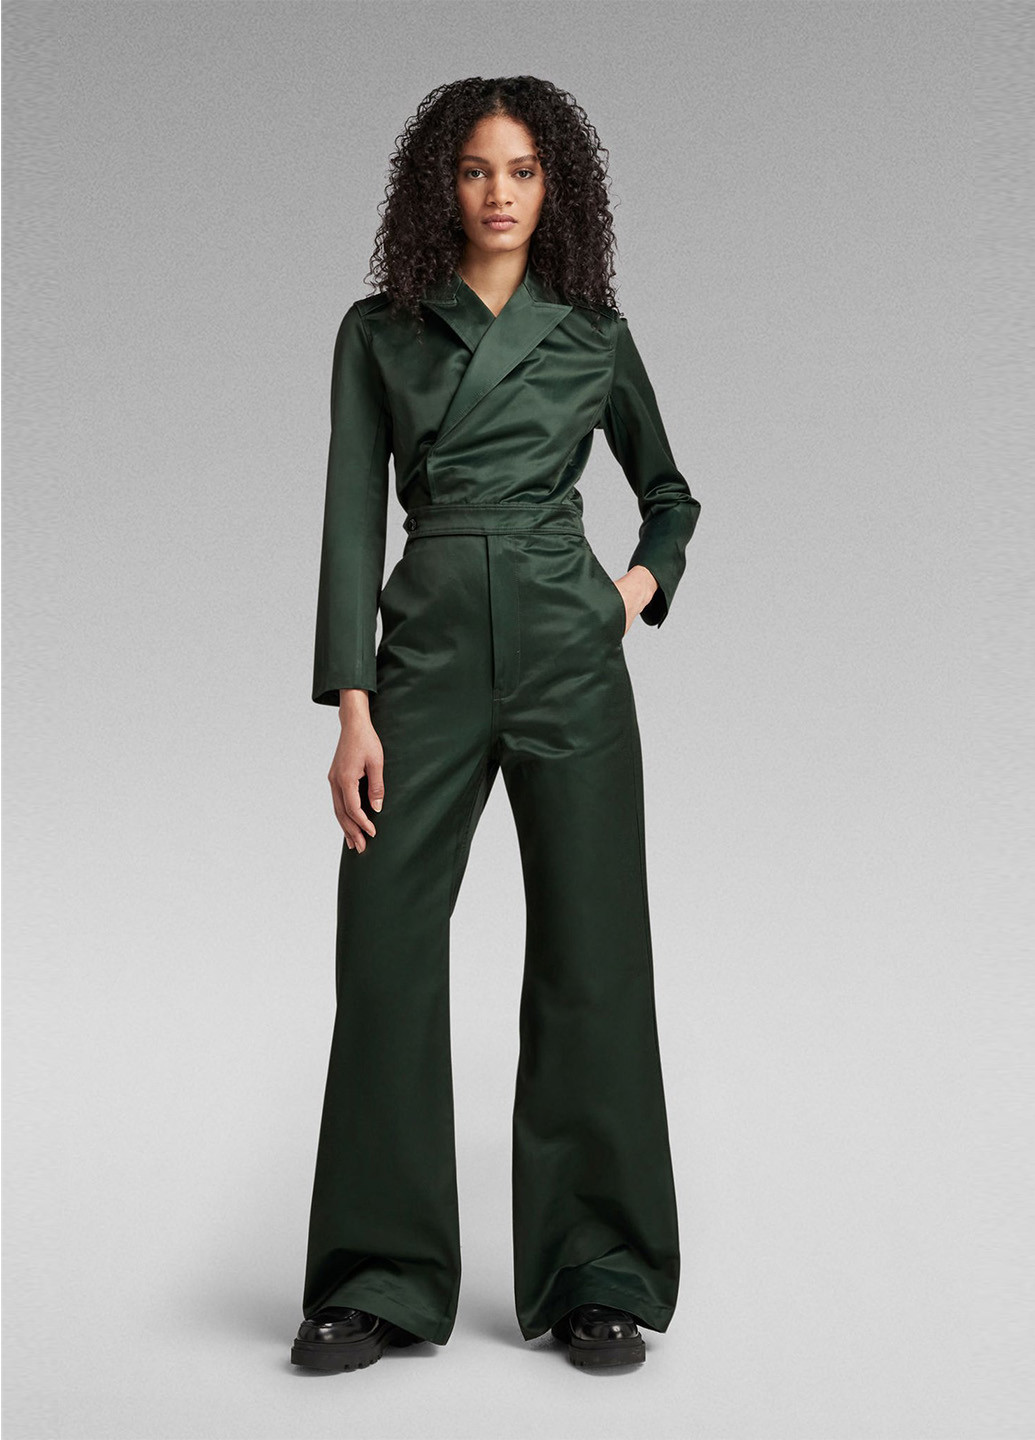 Комбинезон G-Star Raw комбинезон-брюки однотонный зелёный кэжуал хлопок